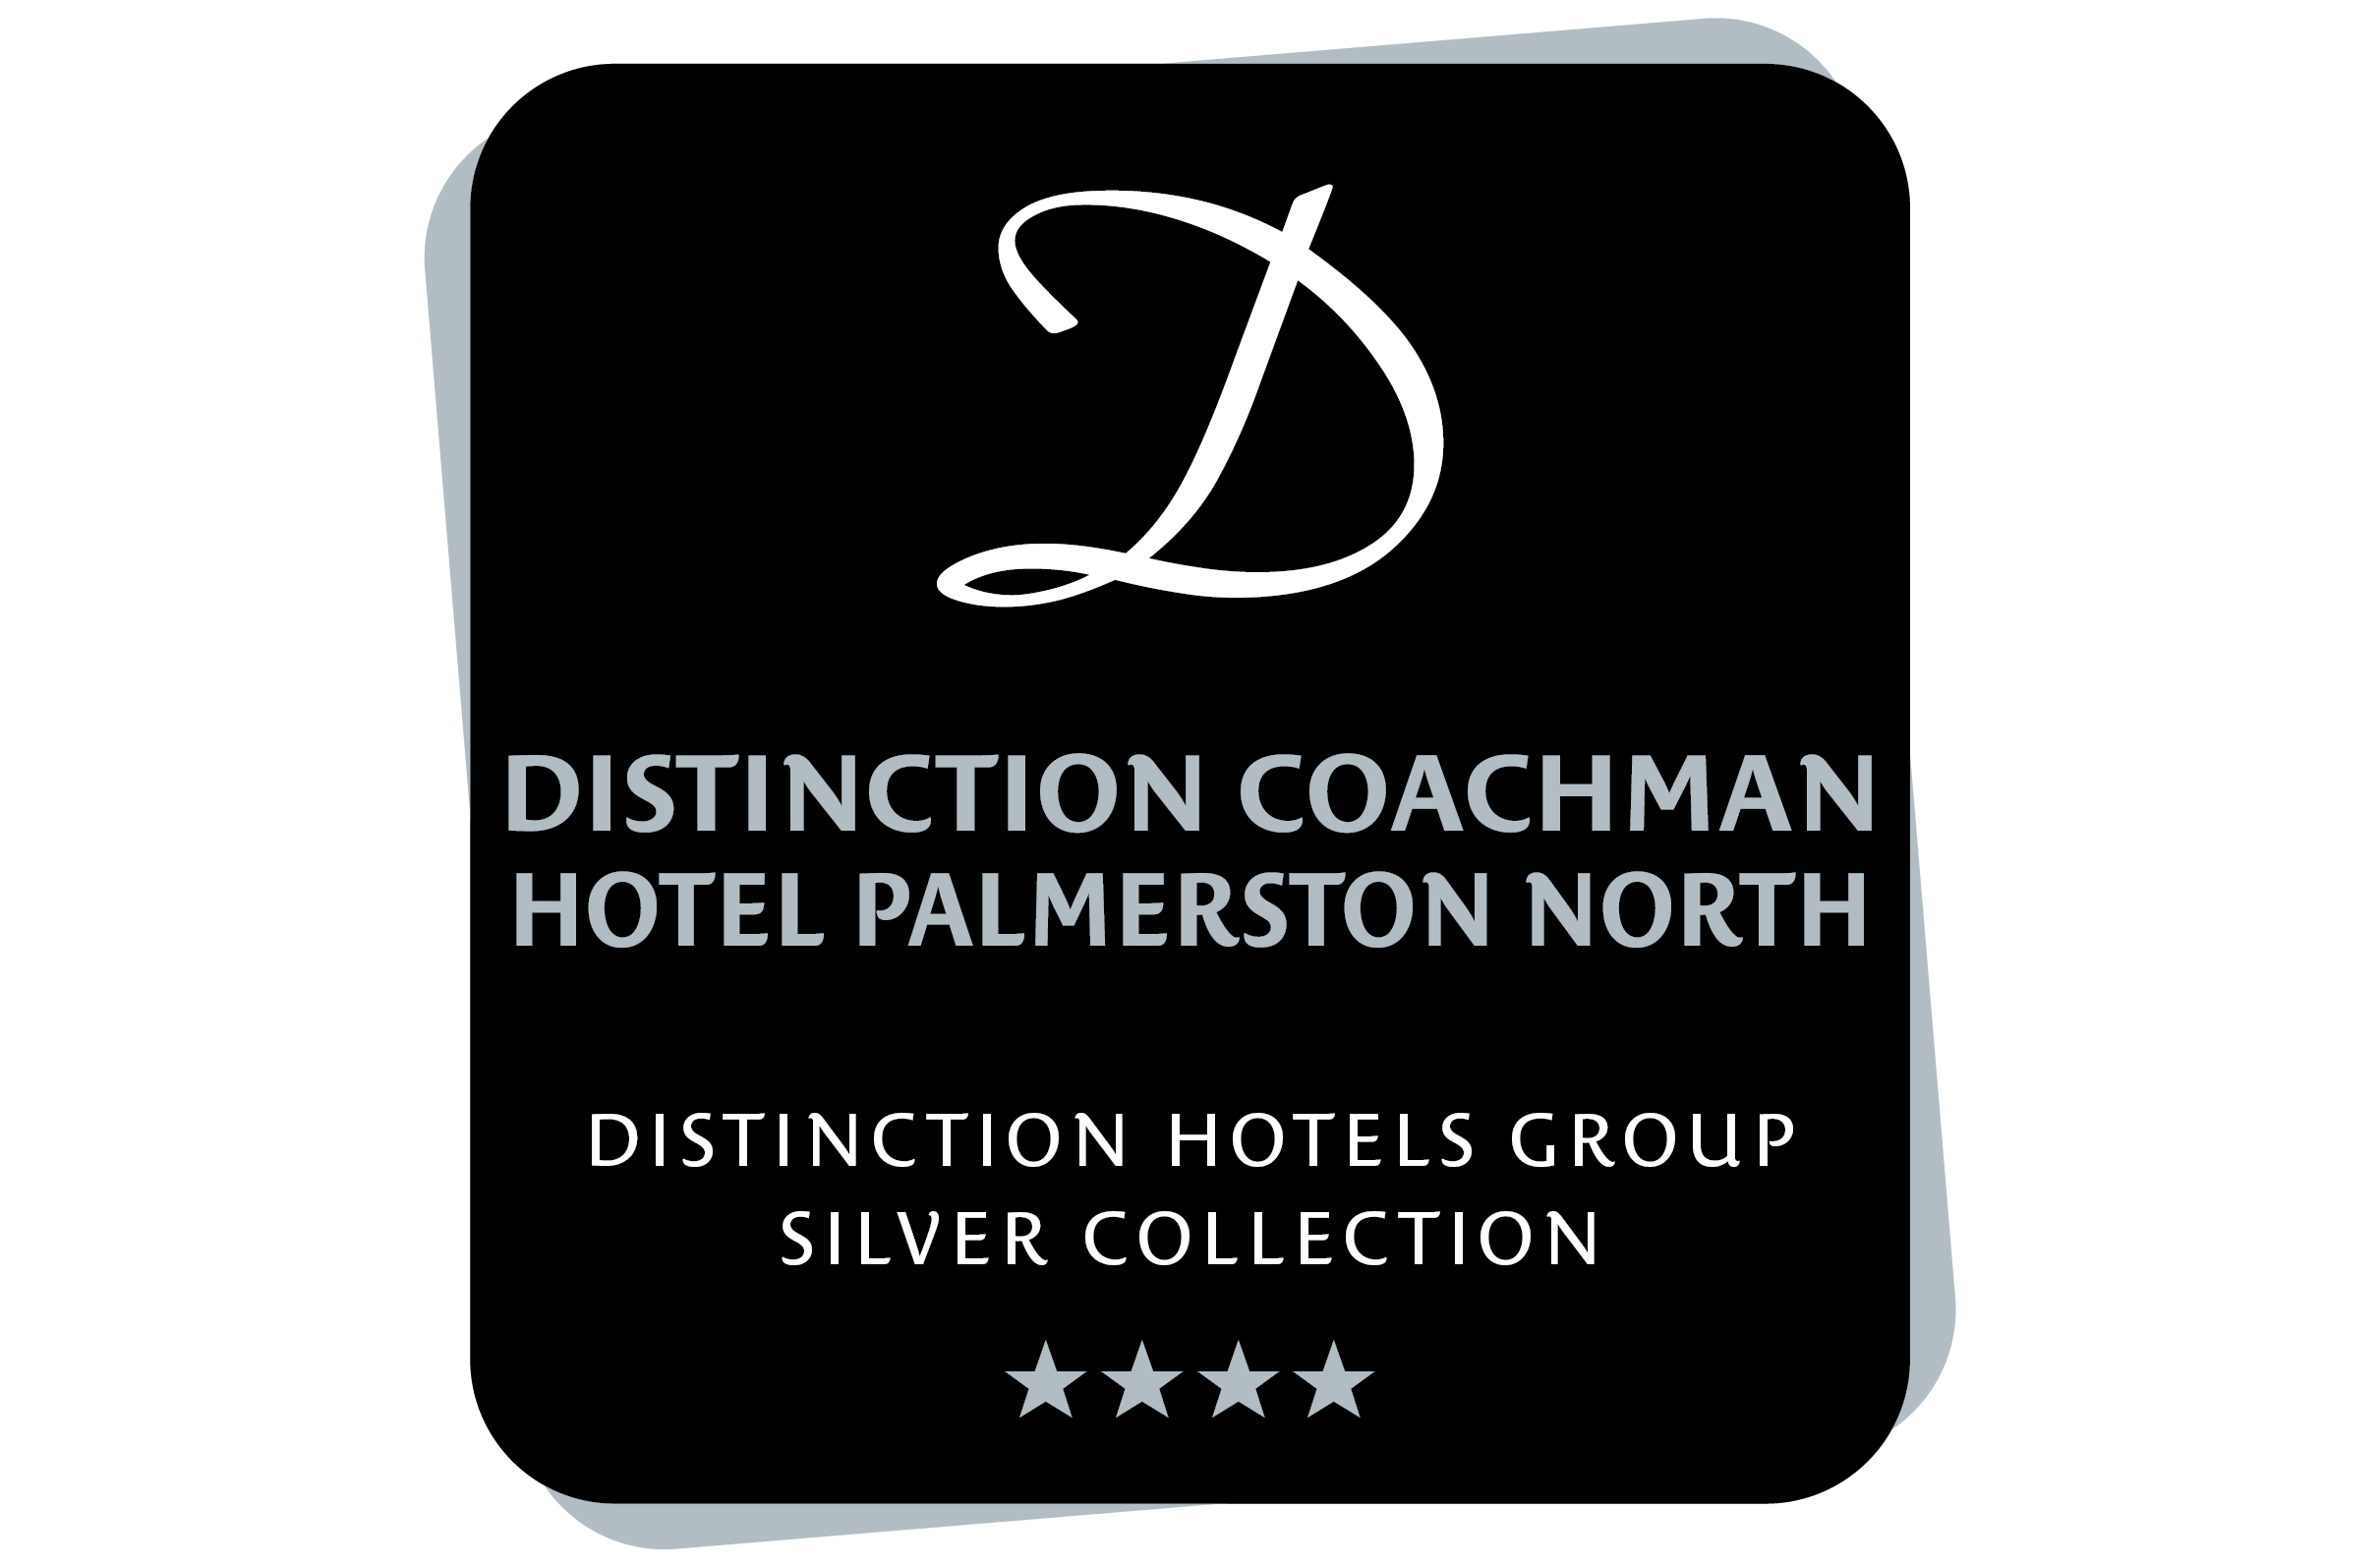 
Distinction Coachman Hotel Palmerston North